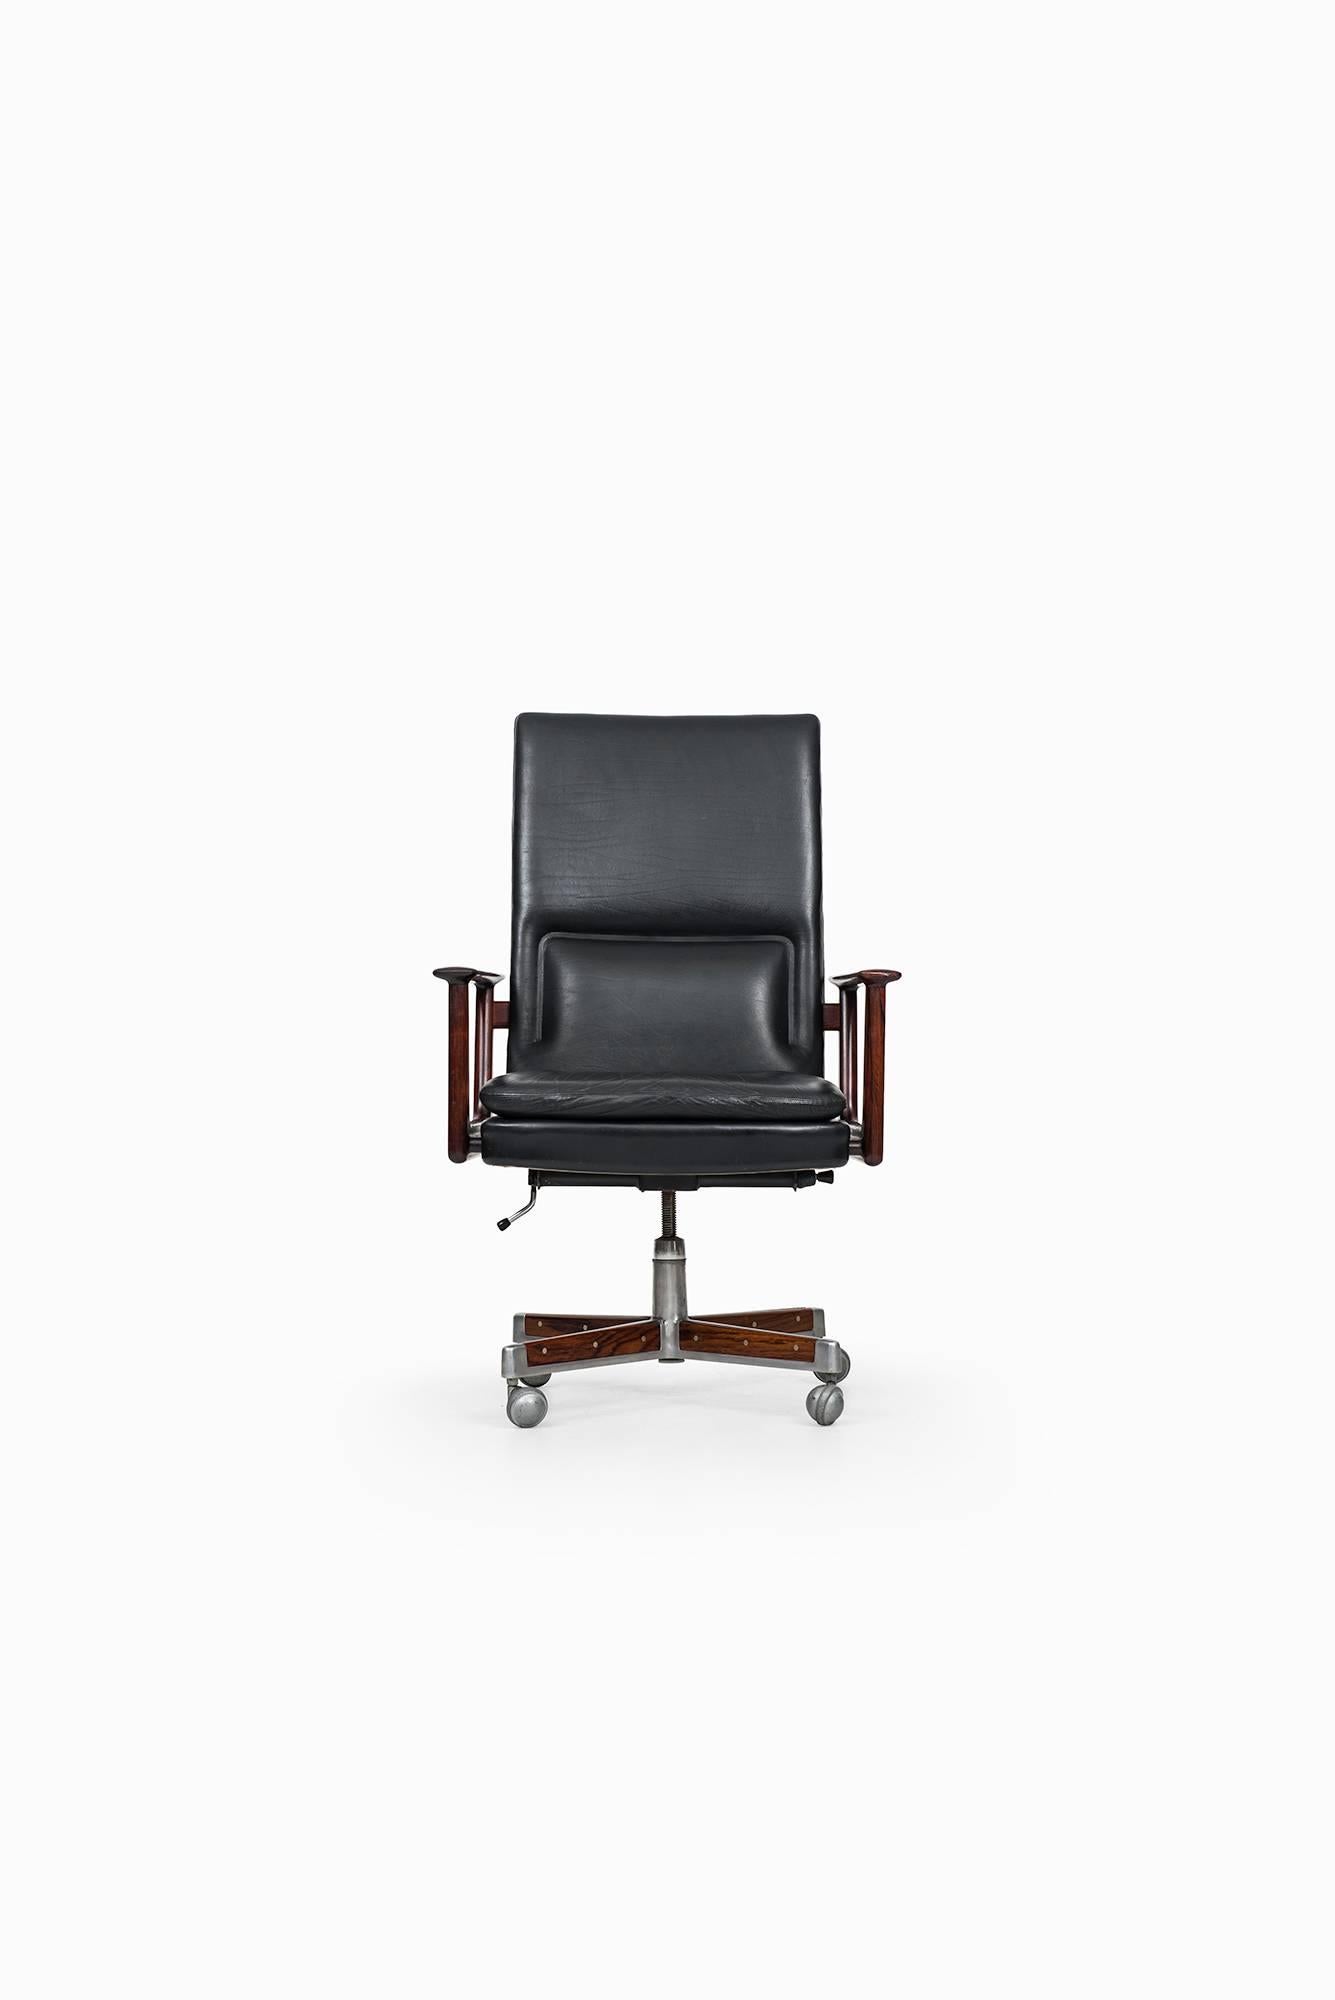 Rare office chair designed by Arne Vodder. Produced Sibast møbelfabrik in Denmark.